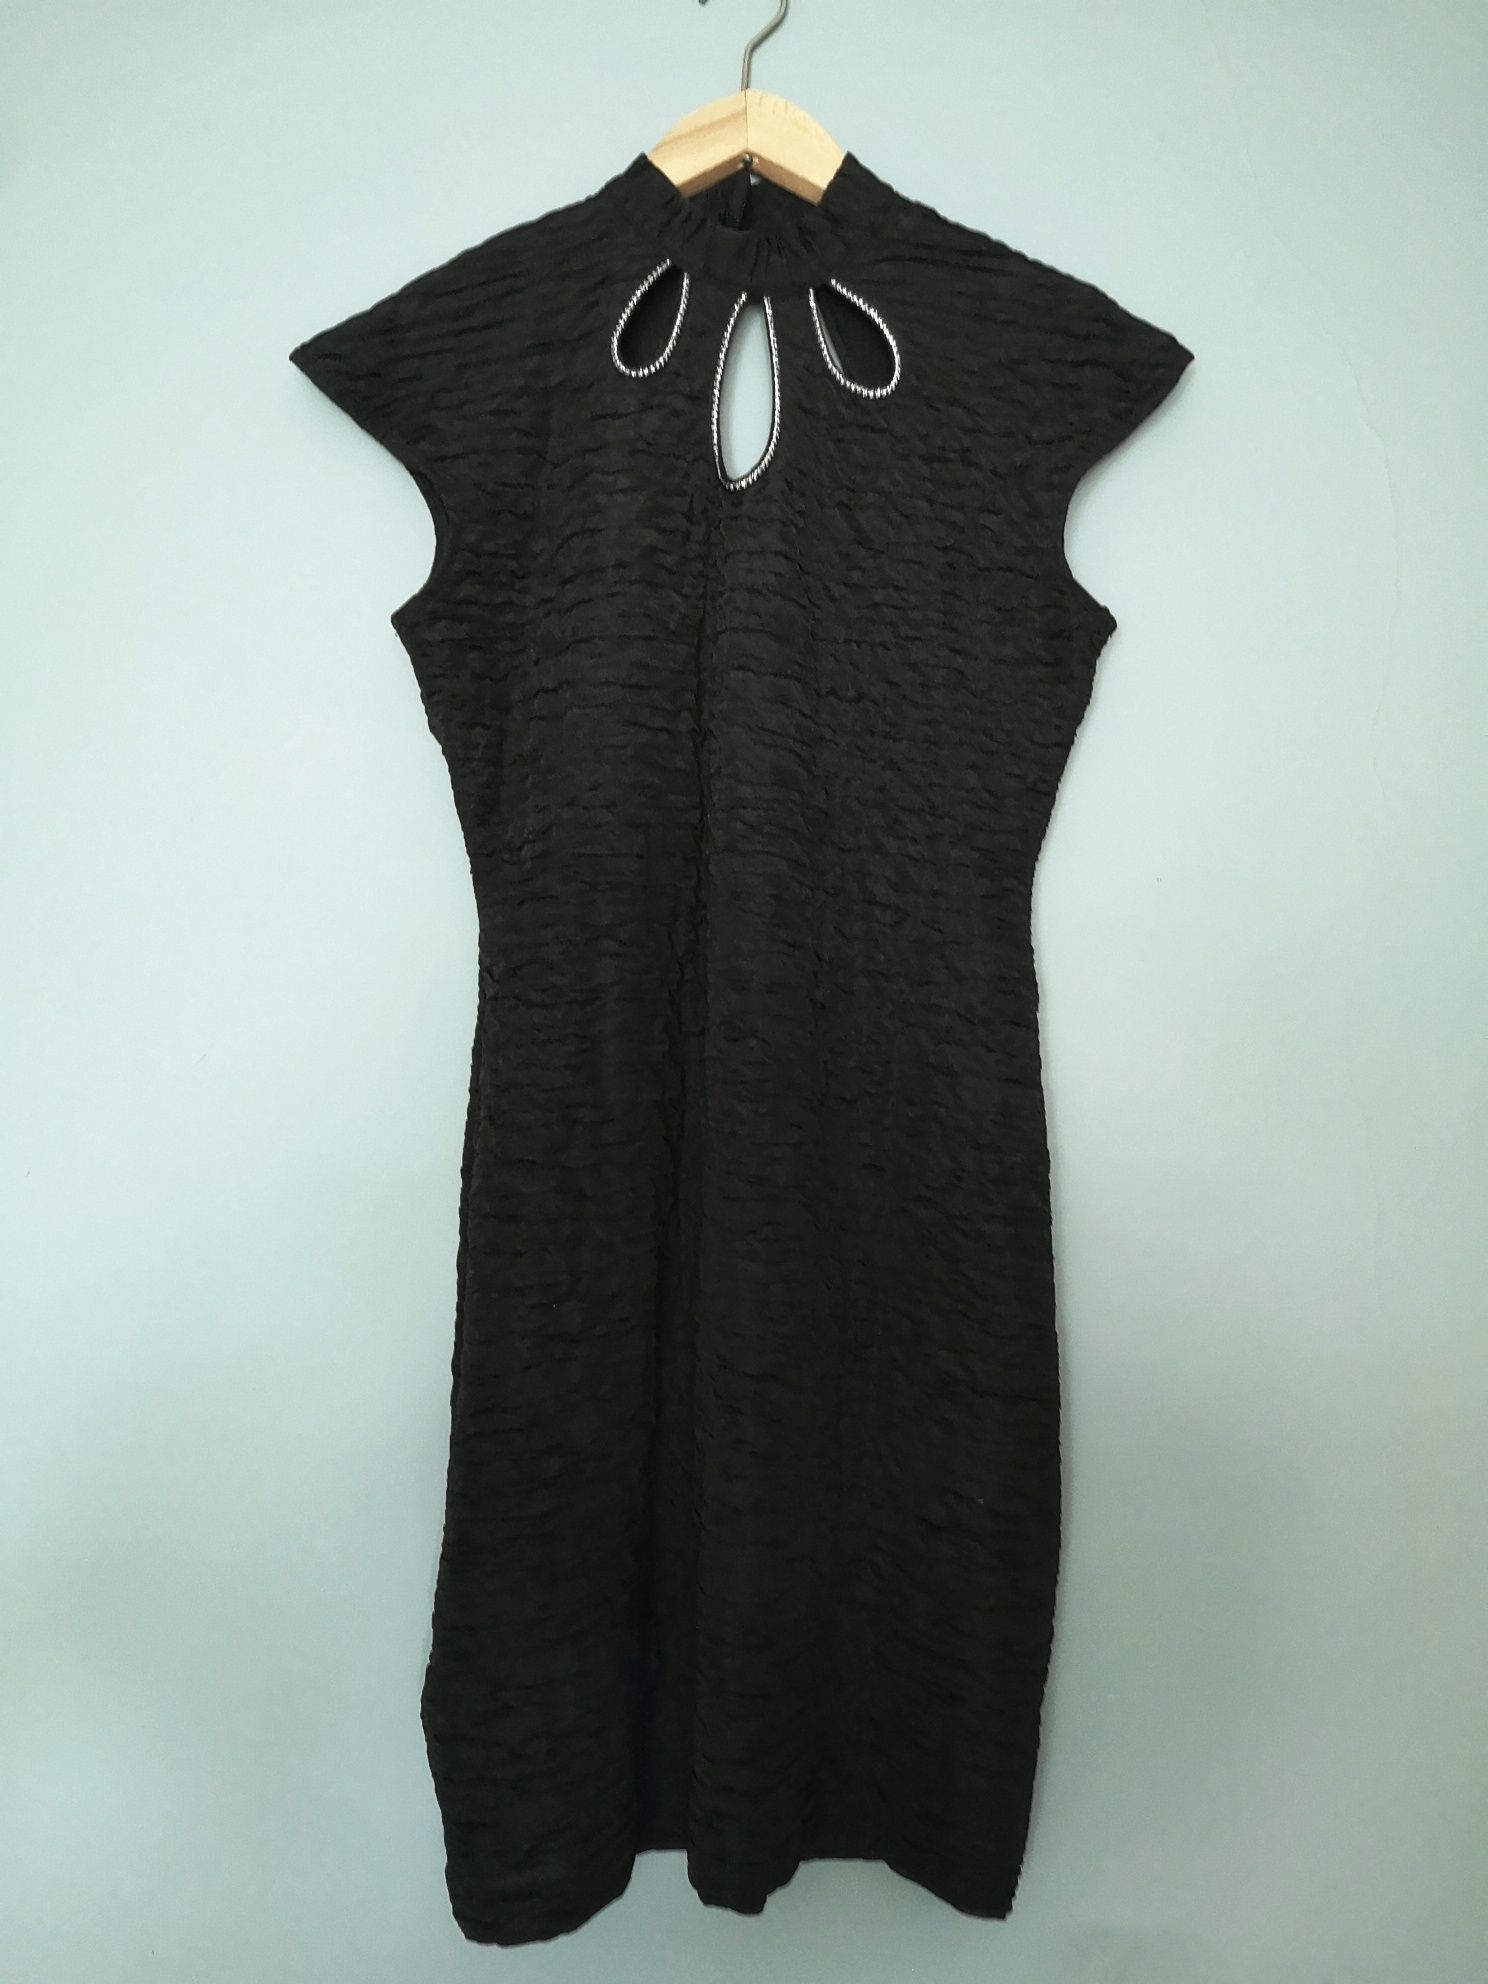 Sukienka mini czarna dopasowana sukienka rozmiar S/M 36/38